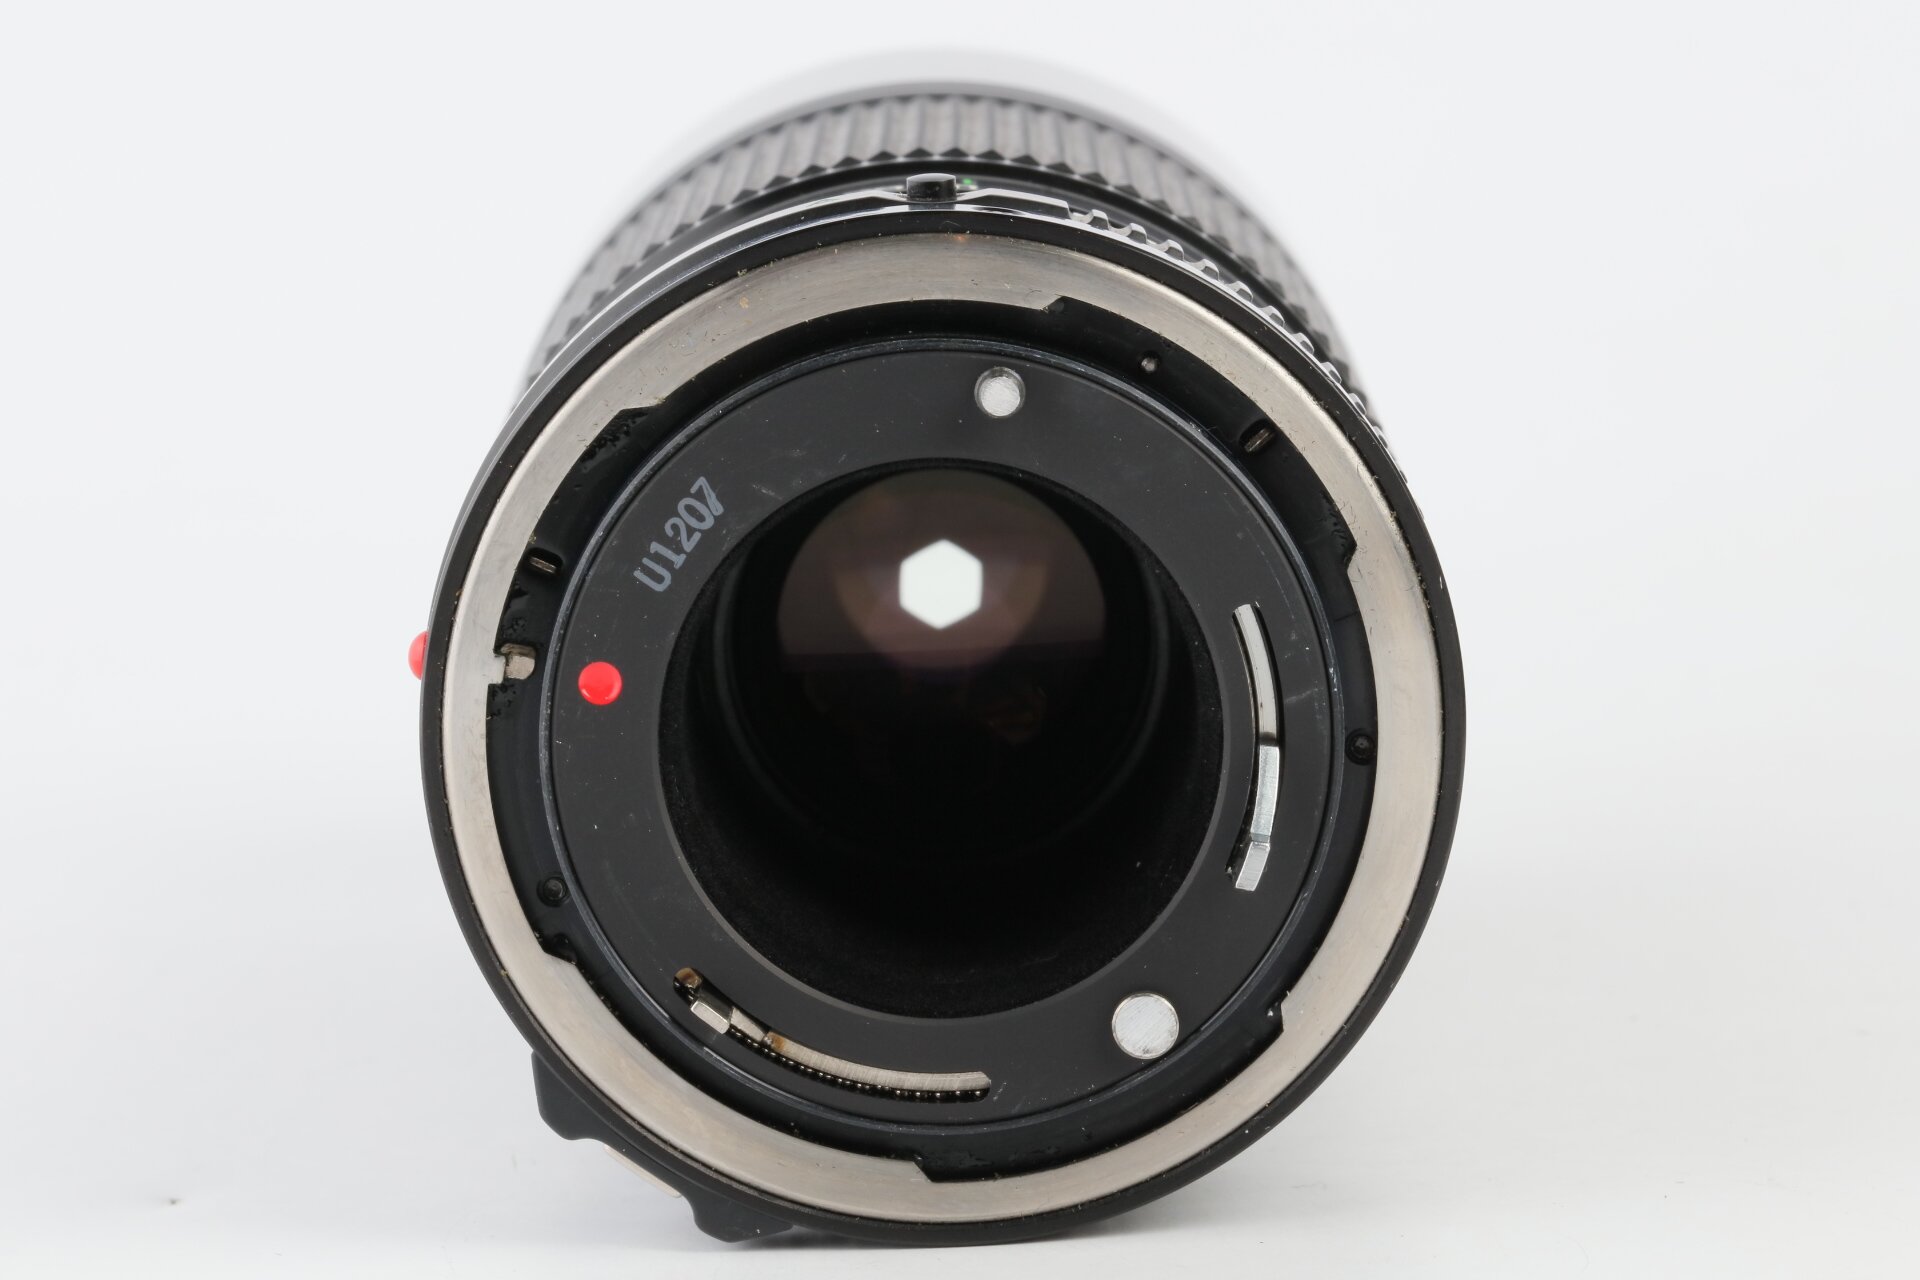 Canon FD 70-150mm 4,5 Zoom